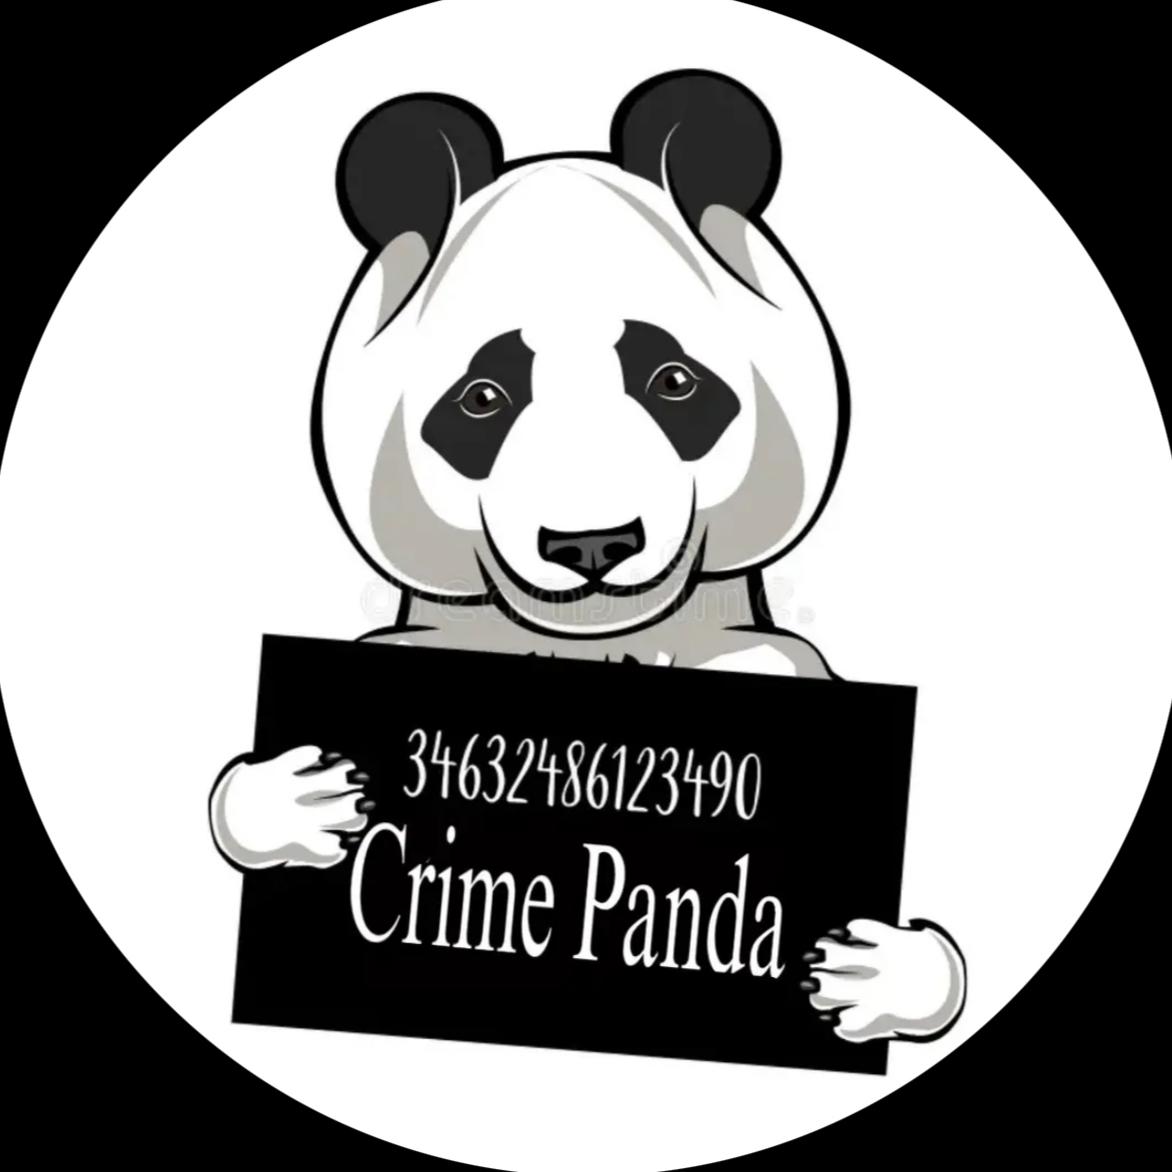 Crime Panda's images